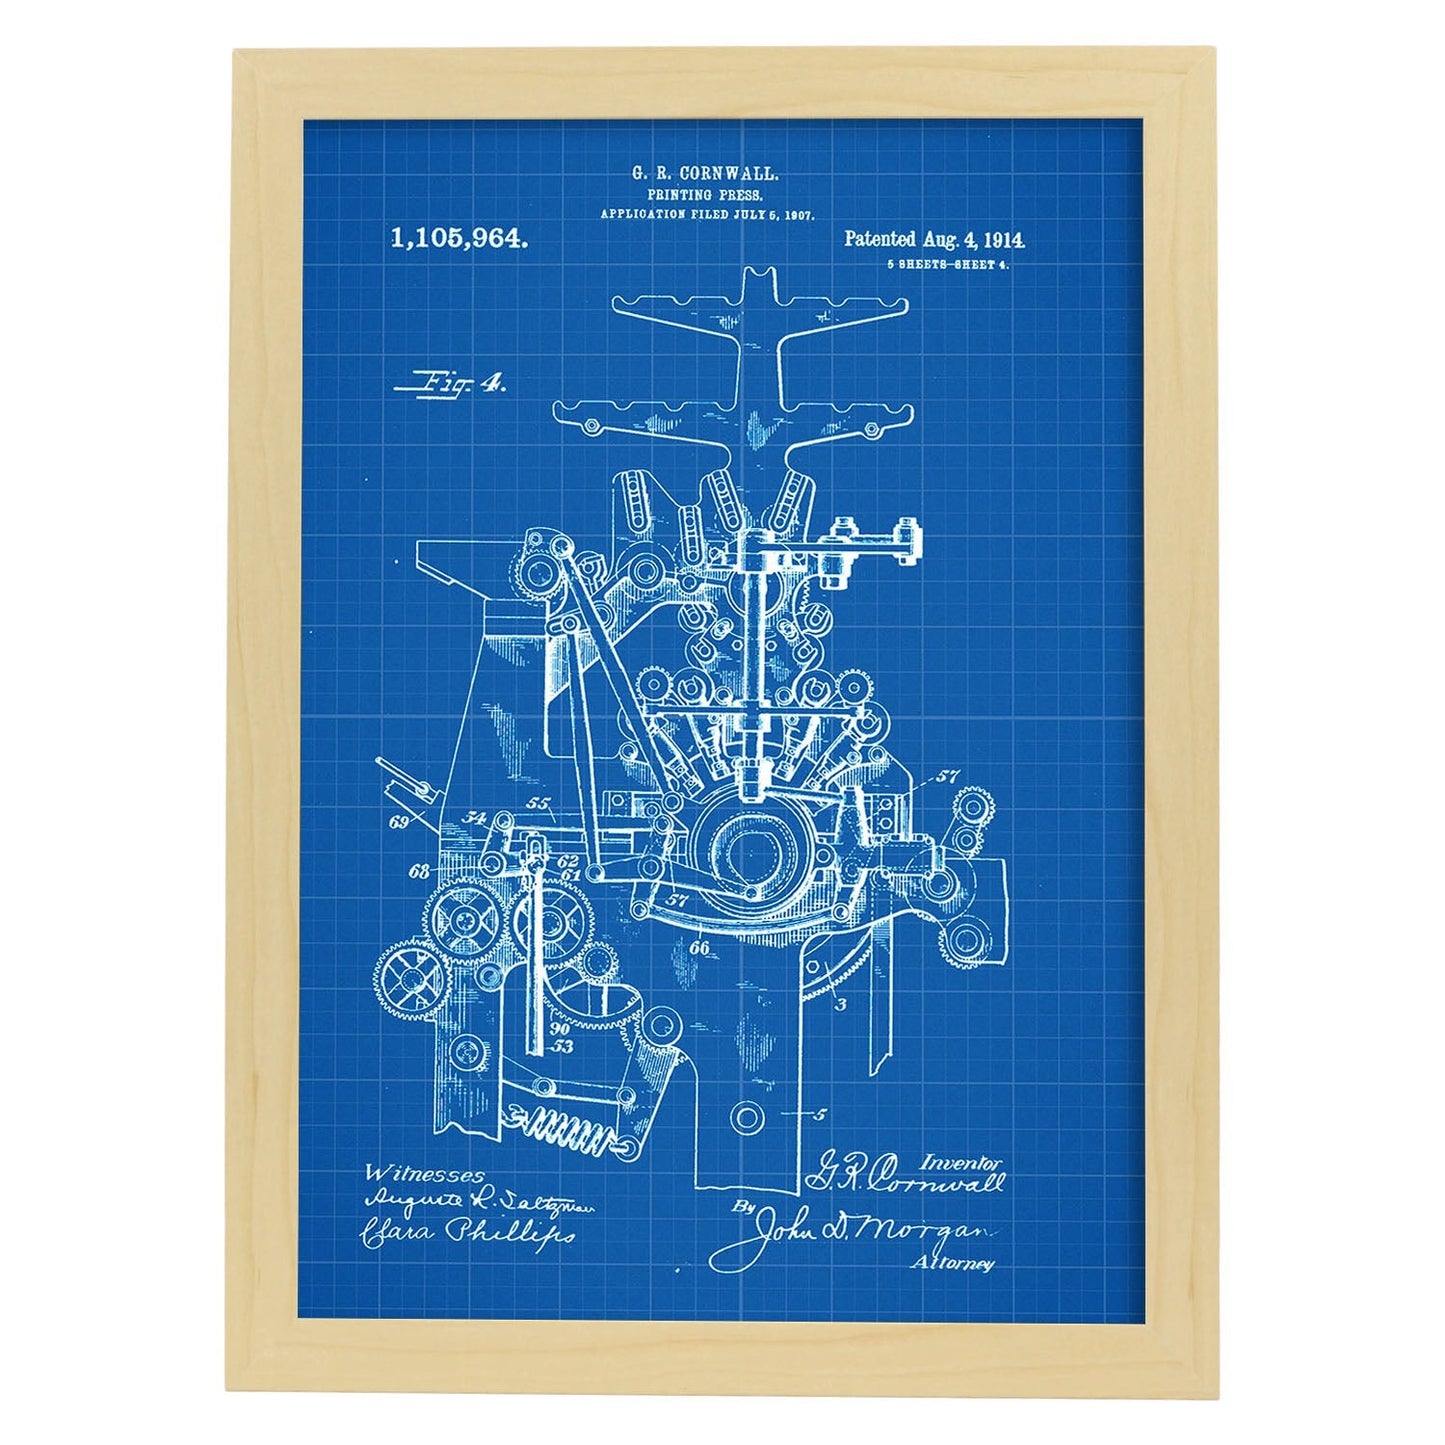 Poster con patente de Prensa de impresion 4. Lámina con diseño de patente antigua-Artwork-Nacnic-A4-Marco Madera clara-Nacnic Estudio SL